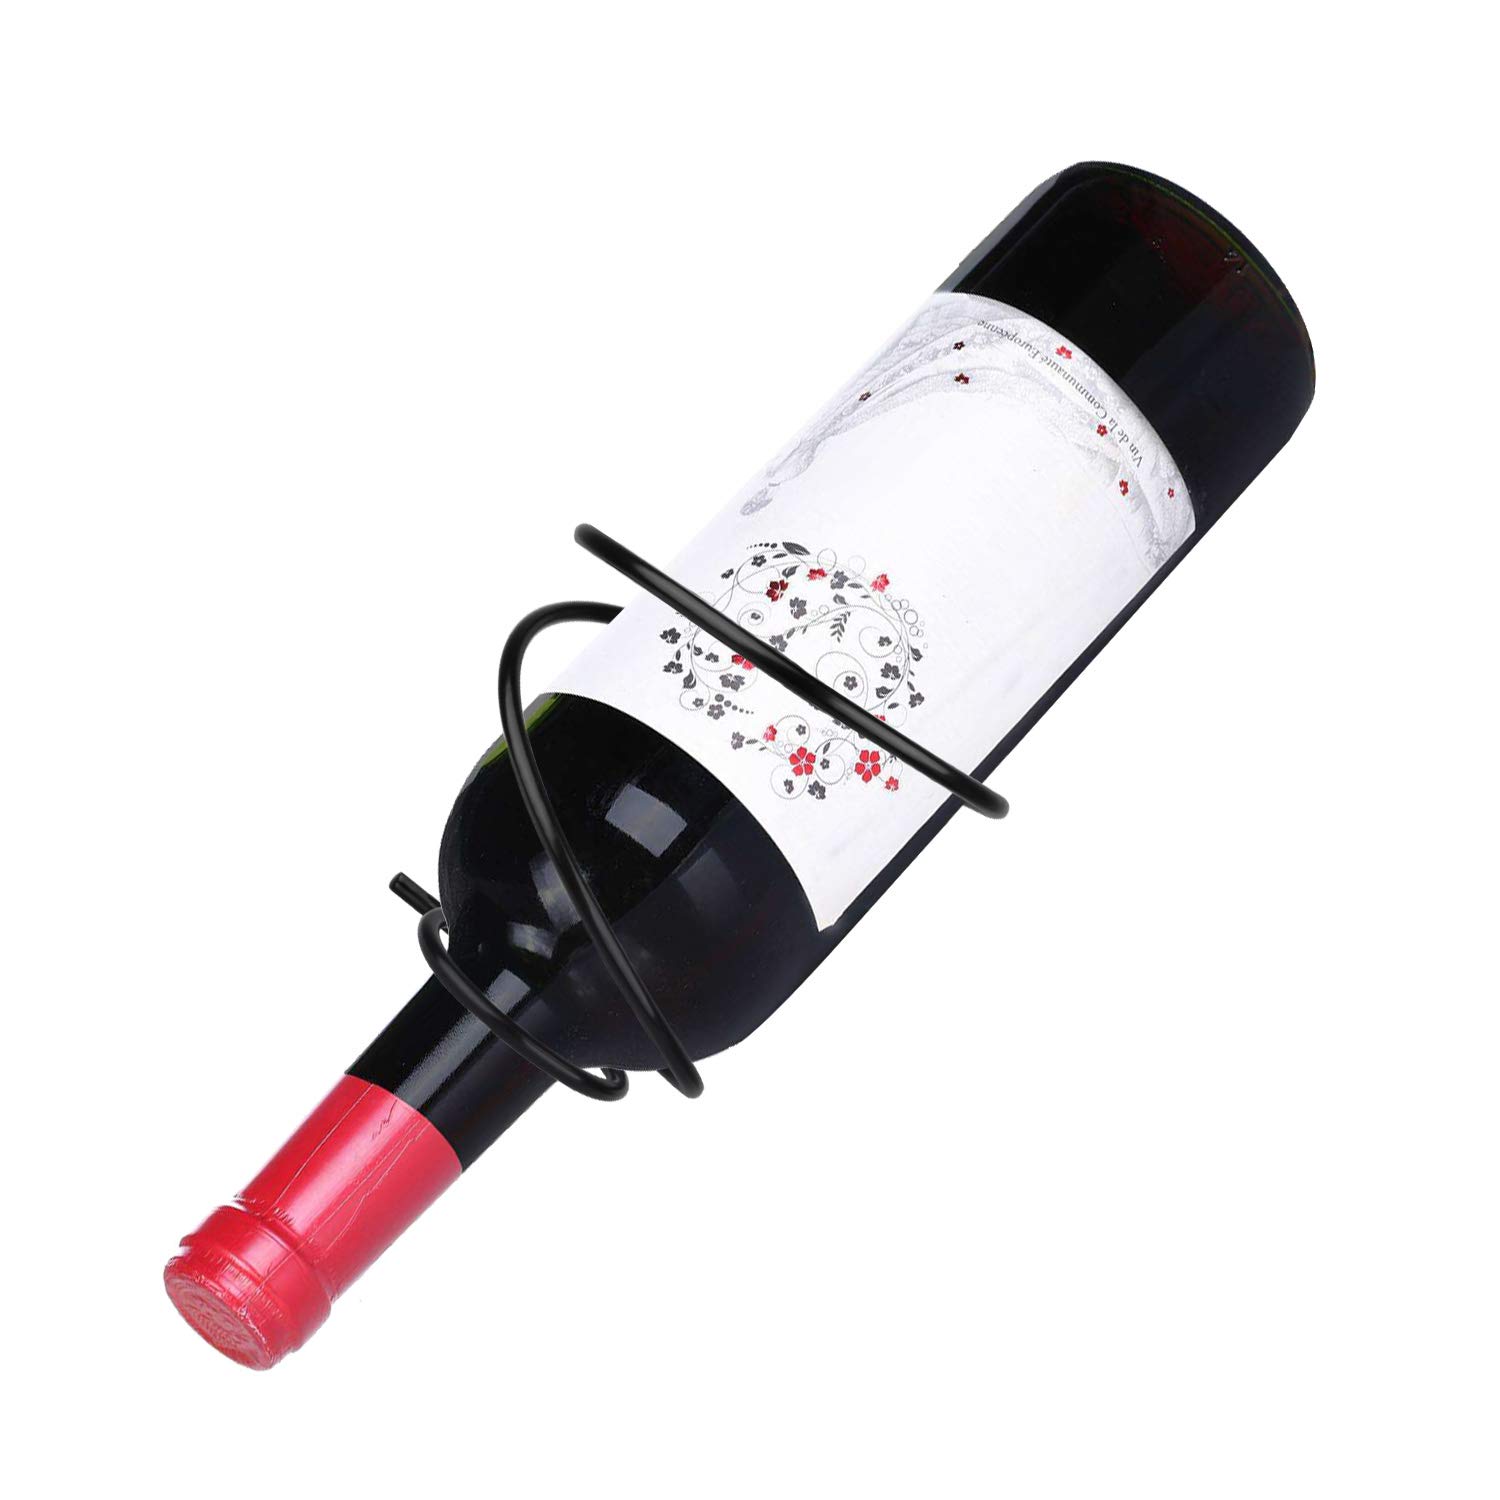 Yimerlen 6 Pcs Spiral Wine Wall Holder, Wall Mounted Wine Rack, Metal Wine Bottle Display Holder for Wine Storage Wall Wine Theme Decor, Black (Downward Style)